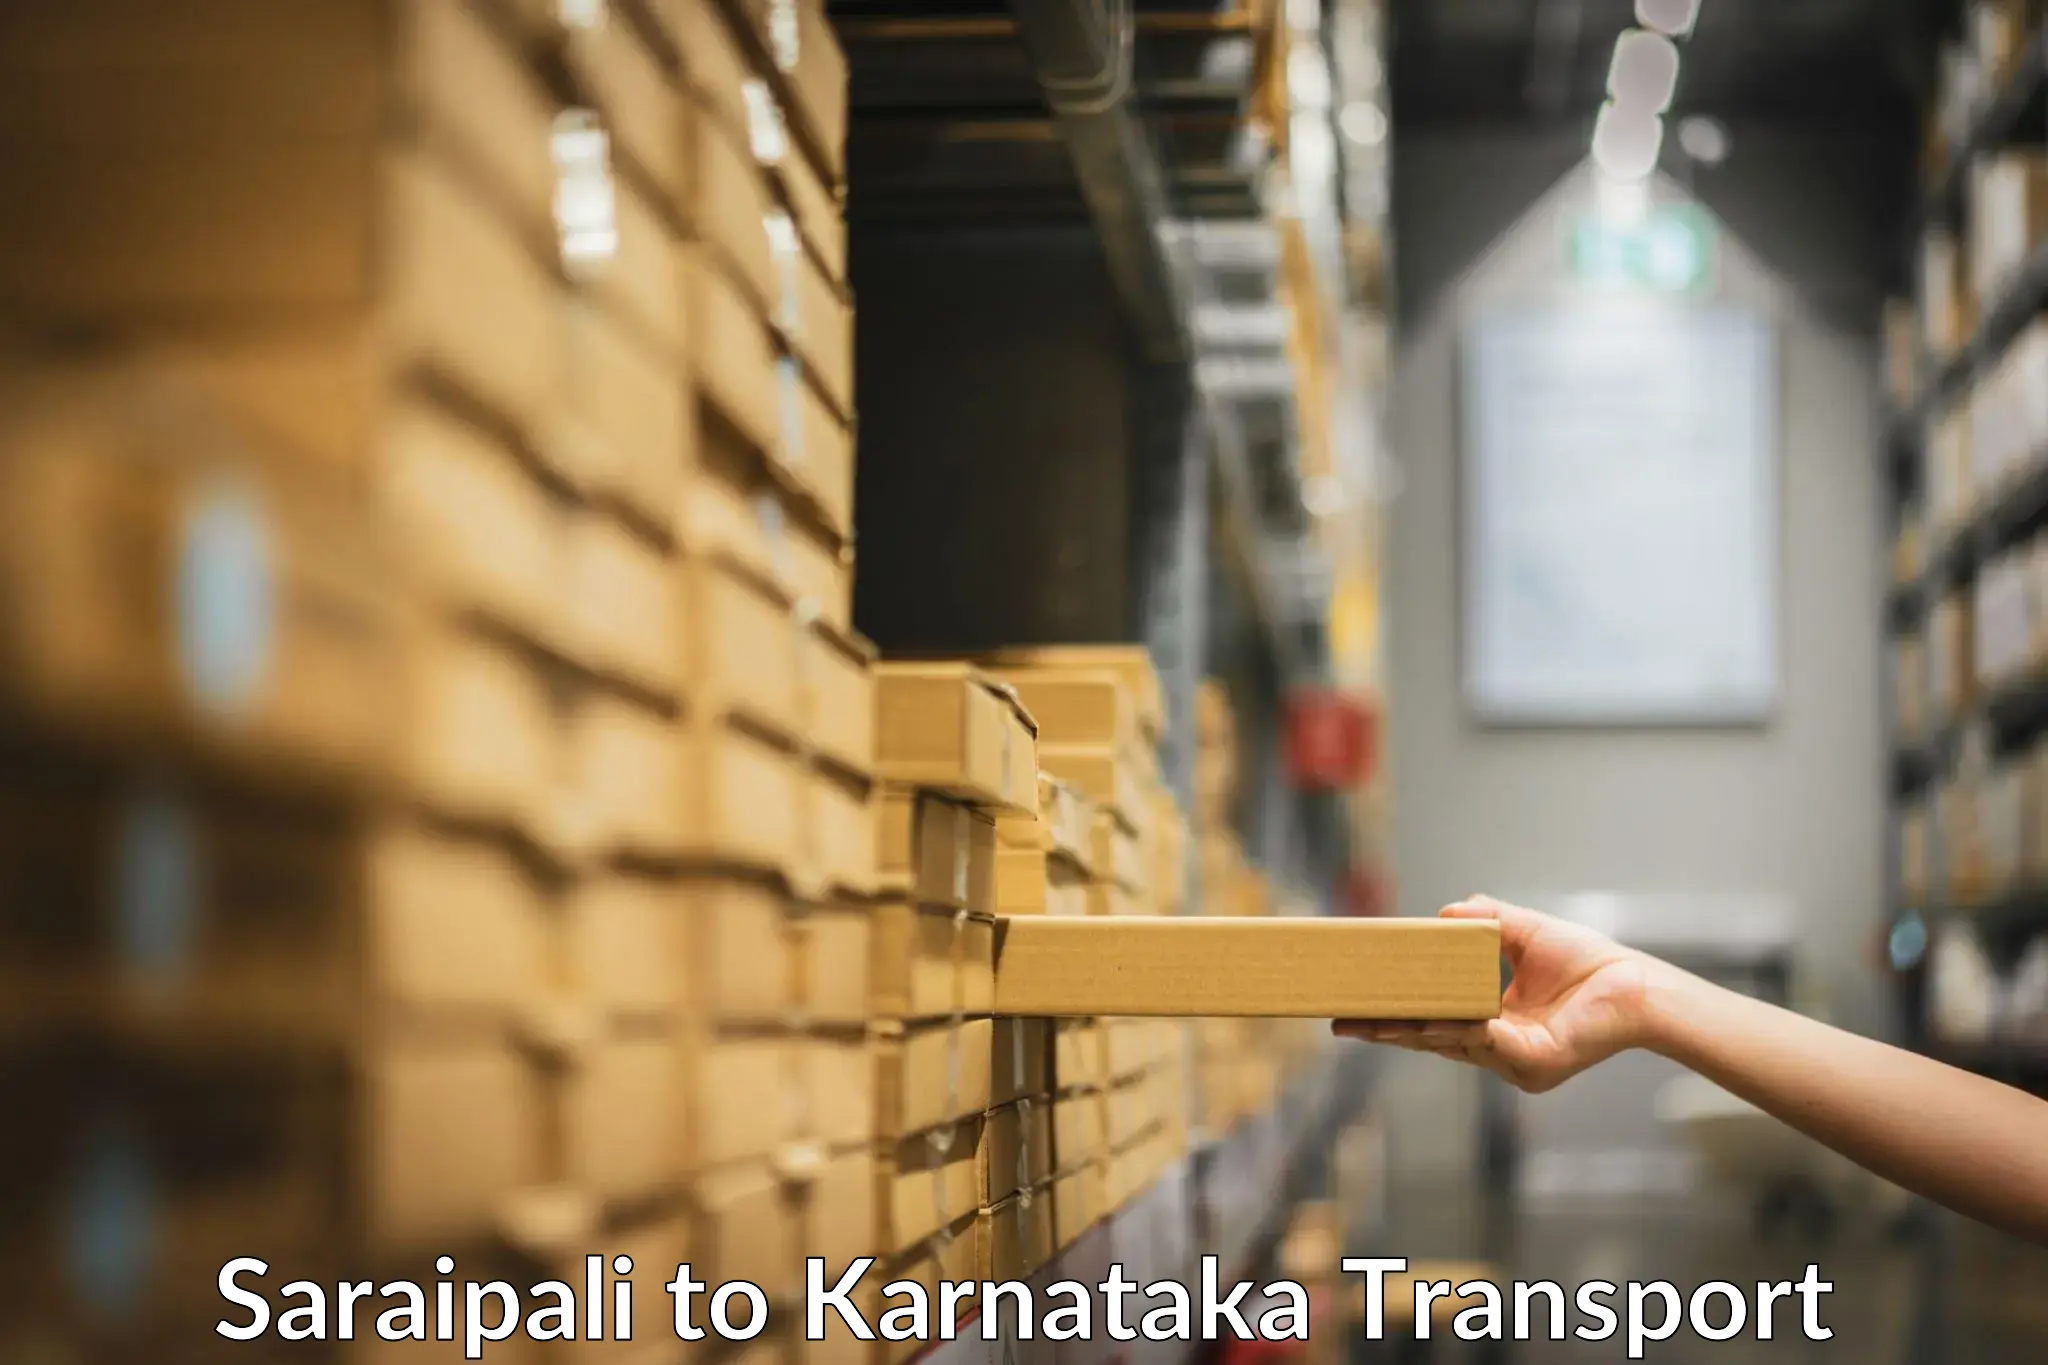 Online transport service Saraipali to Kalaburagi